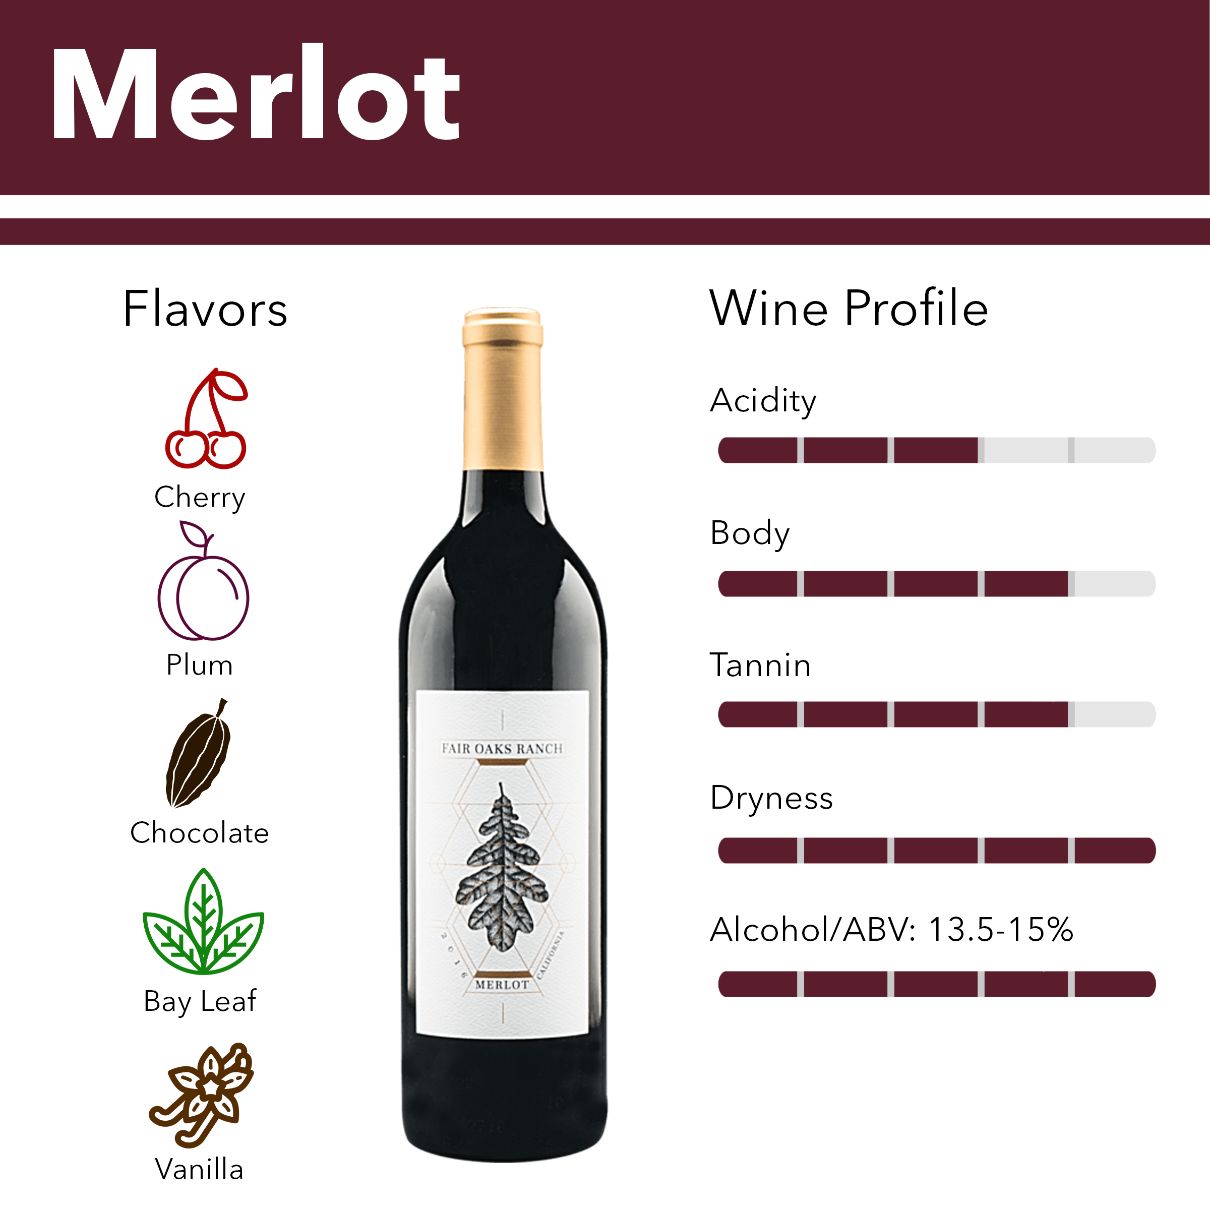 Merlot wine flavor profile.